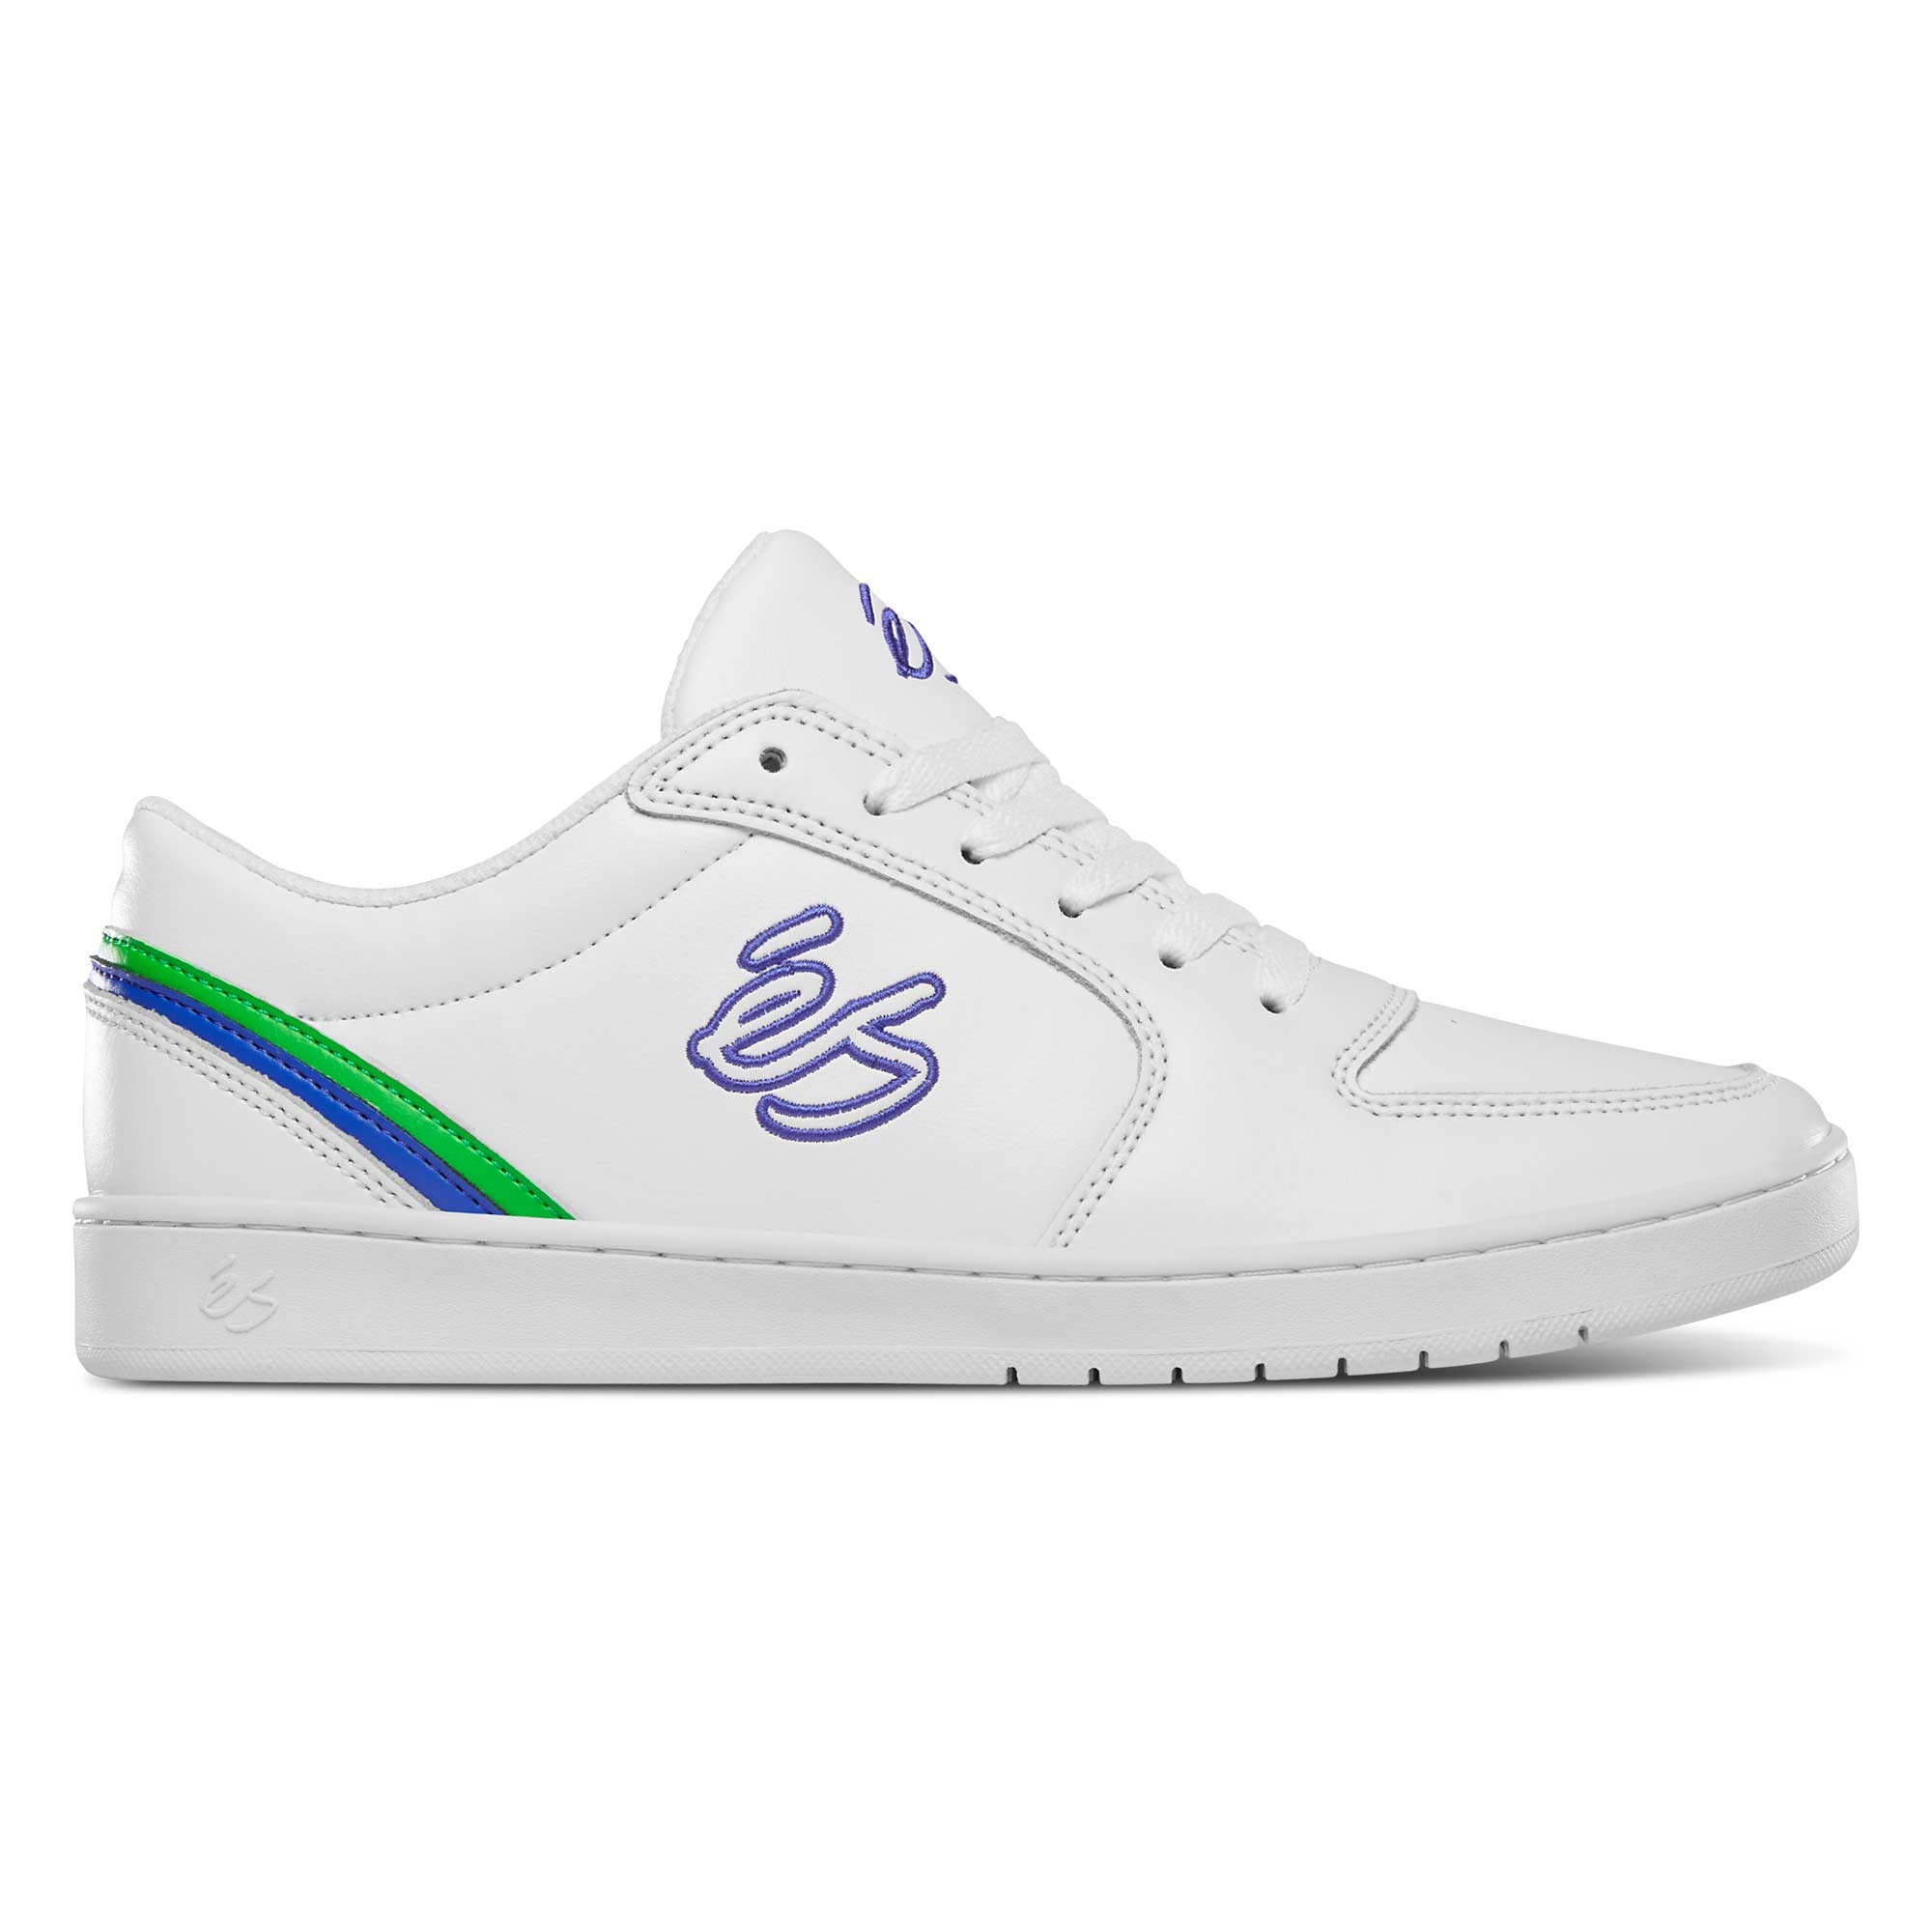 eS SKB Shoe EOS whi/blu/gre white/blue/green